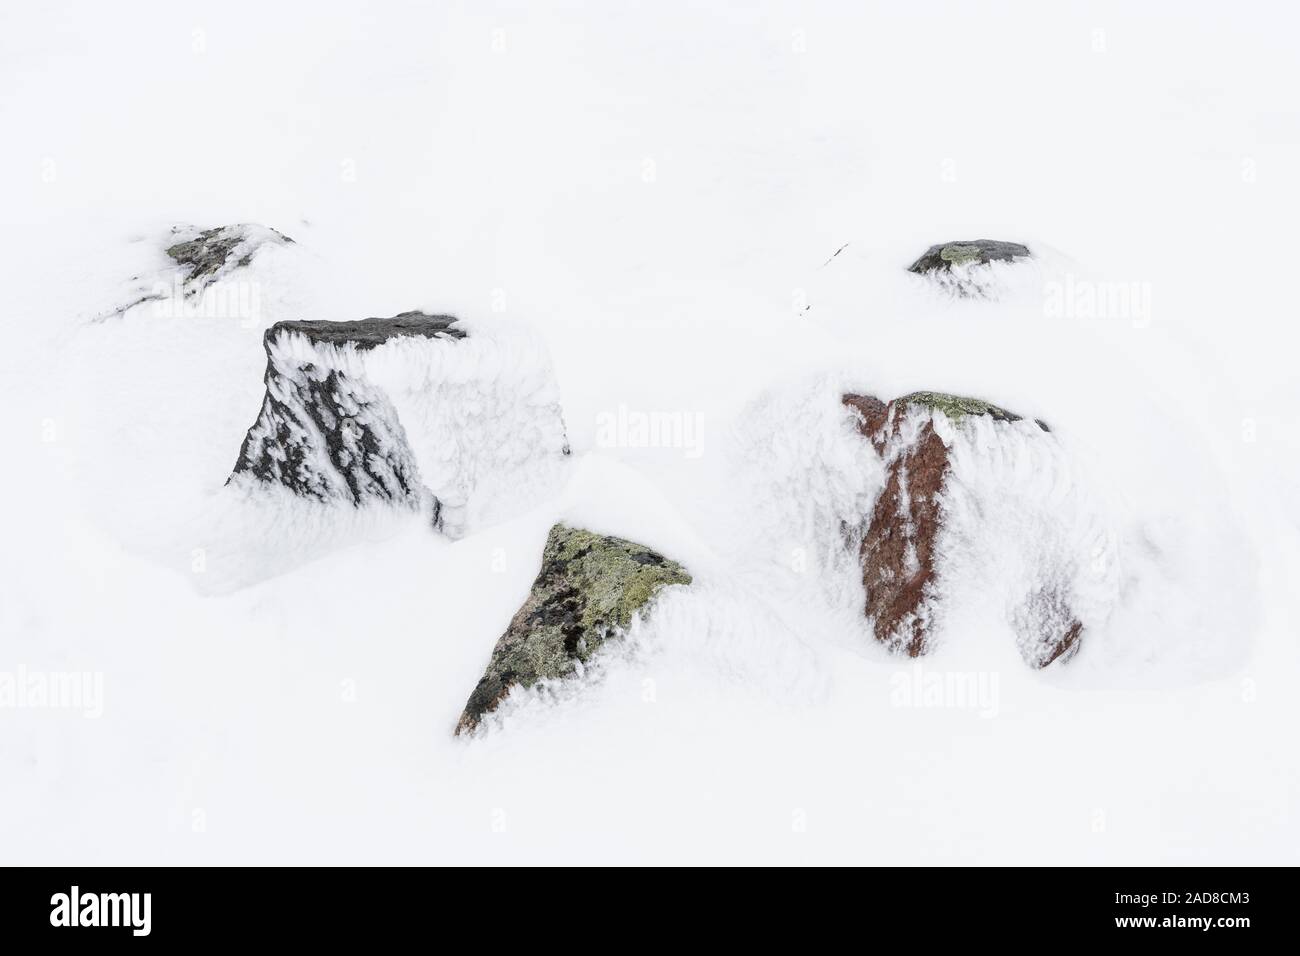 Coperta di neve rocce, Dundret riserva naturale, Gellivare, Lapponia, Svezia Foto Stock